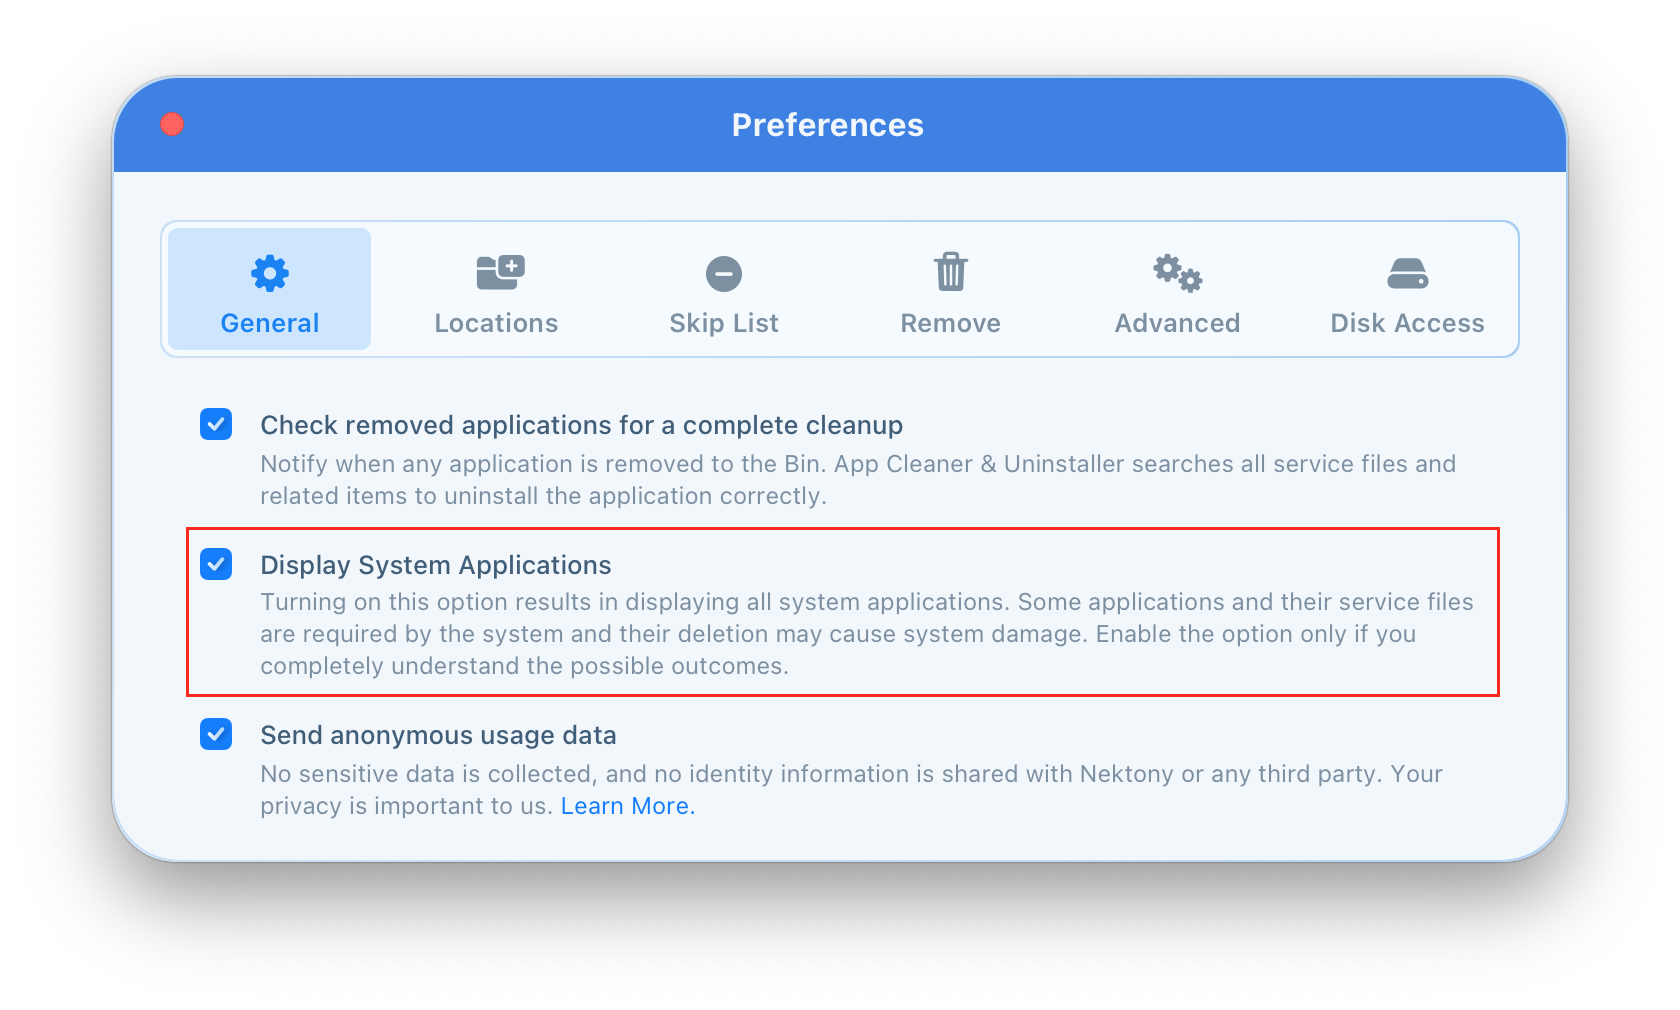 App Cleaner & Uninstaller Preferences window